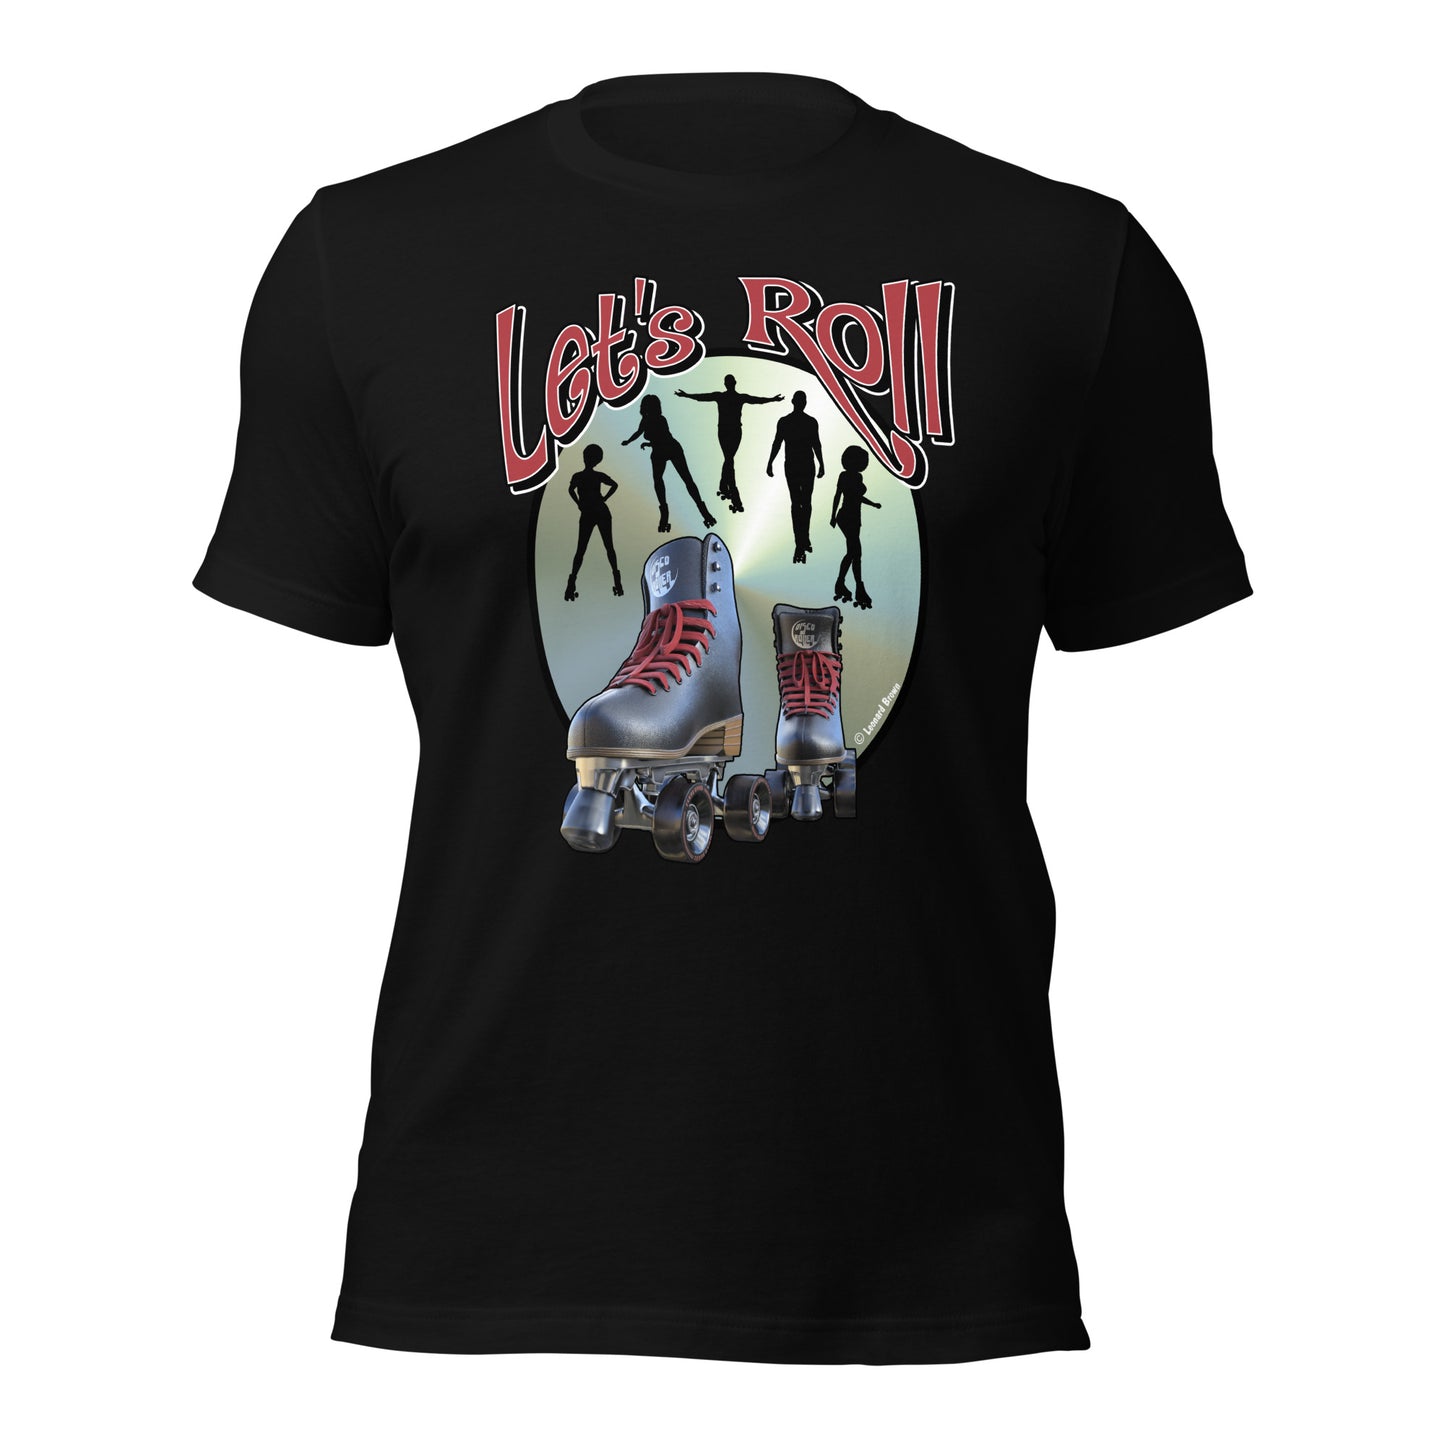 Let’s Roll Black Skates t-shirt